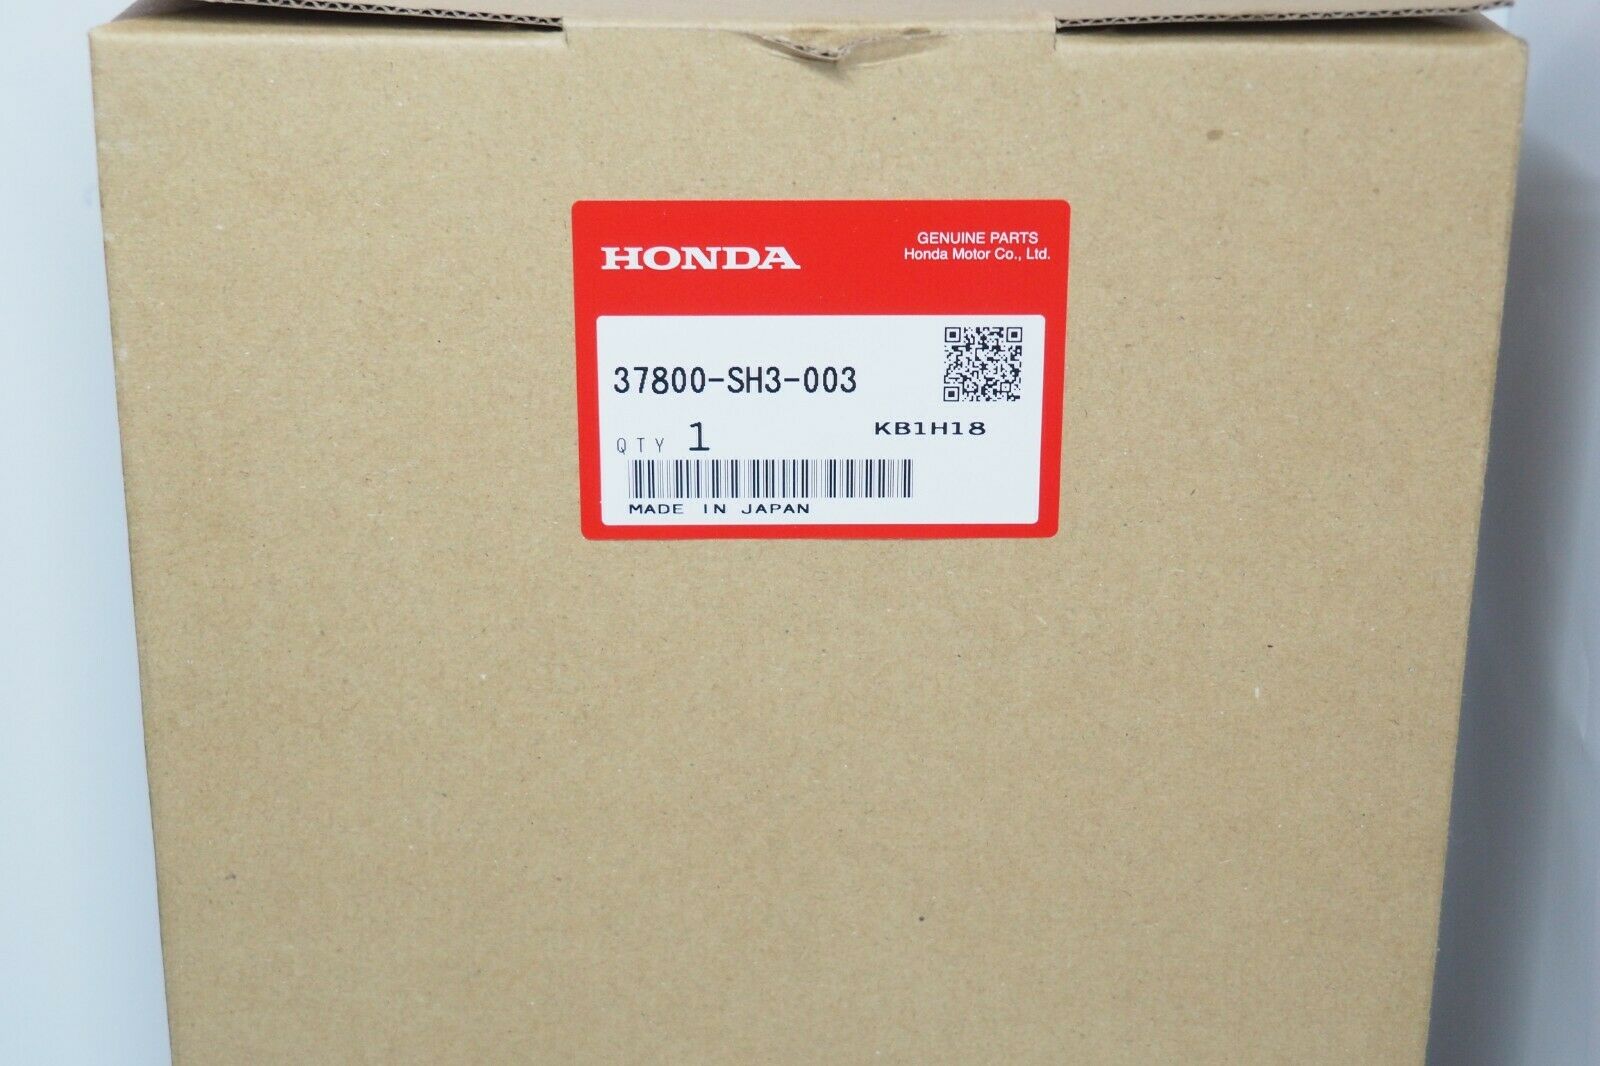 Honda Genuine 1988-1991 Civic CRX Fuel Tank Sending Unit fits  37800-SH3-003 ★